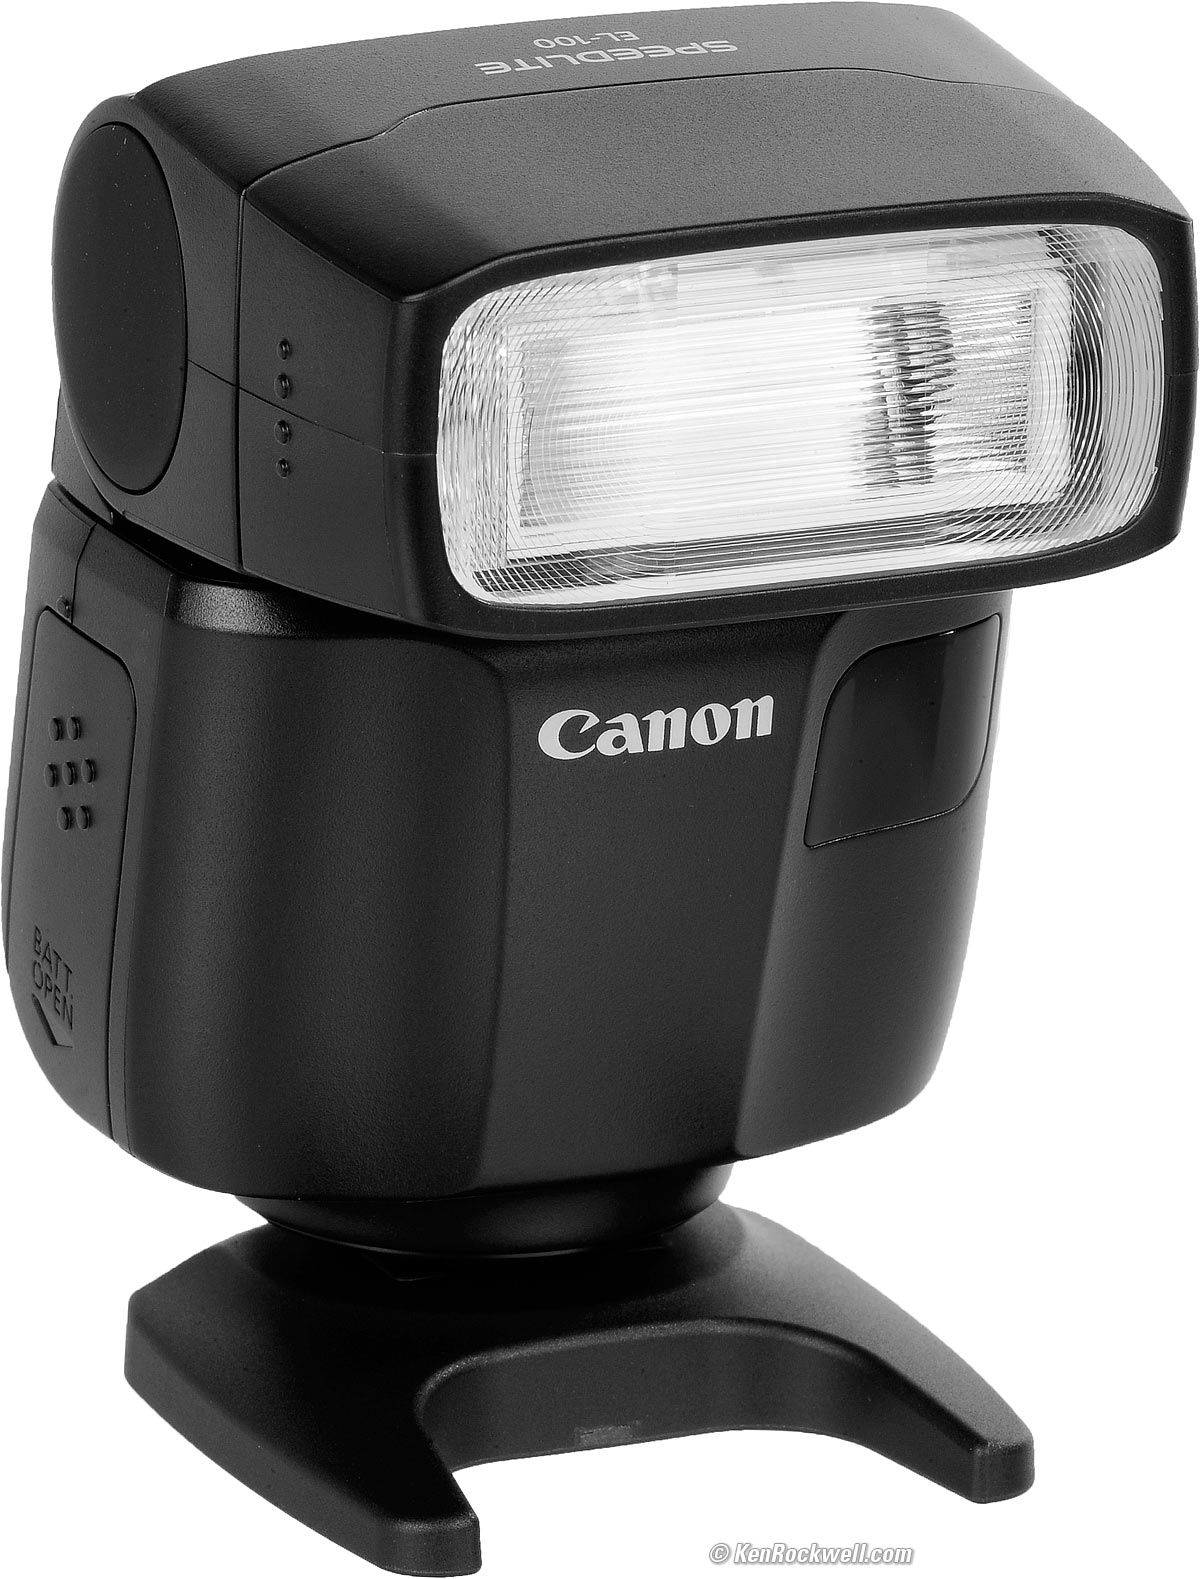 Speedlite Flash for Canon E-TTL Auto Focus HSS Professional Flash